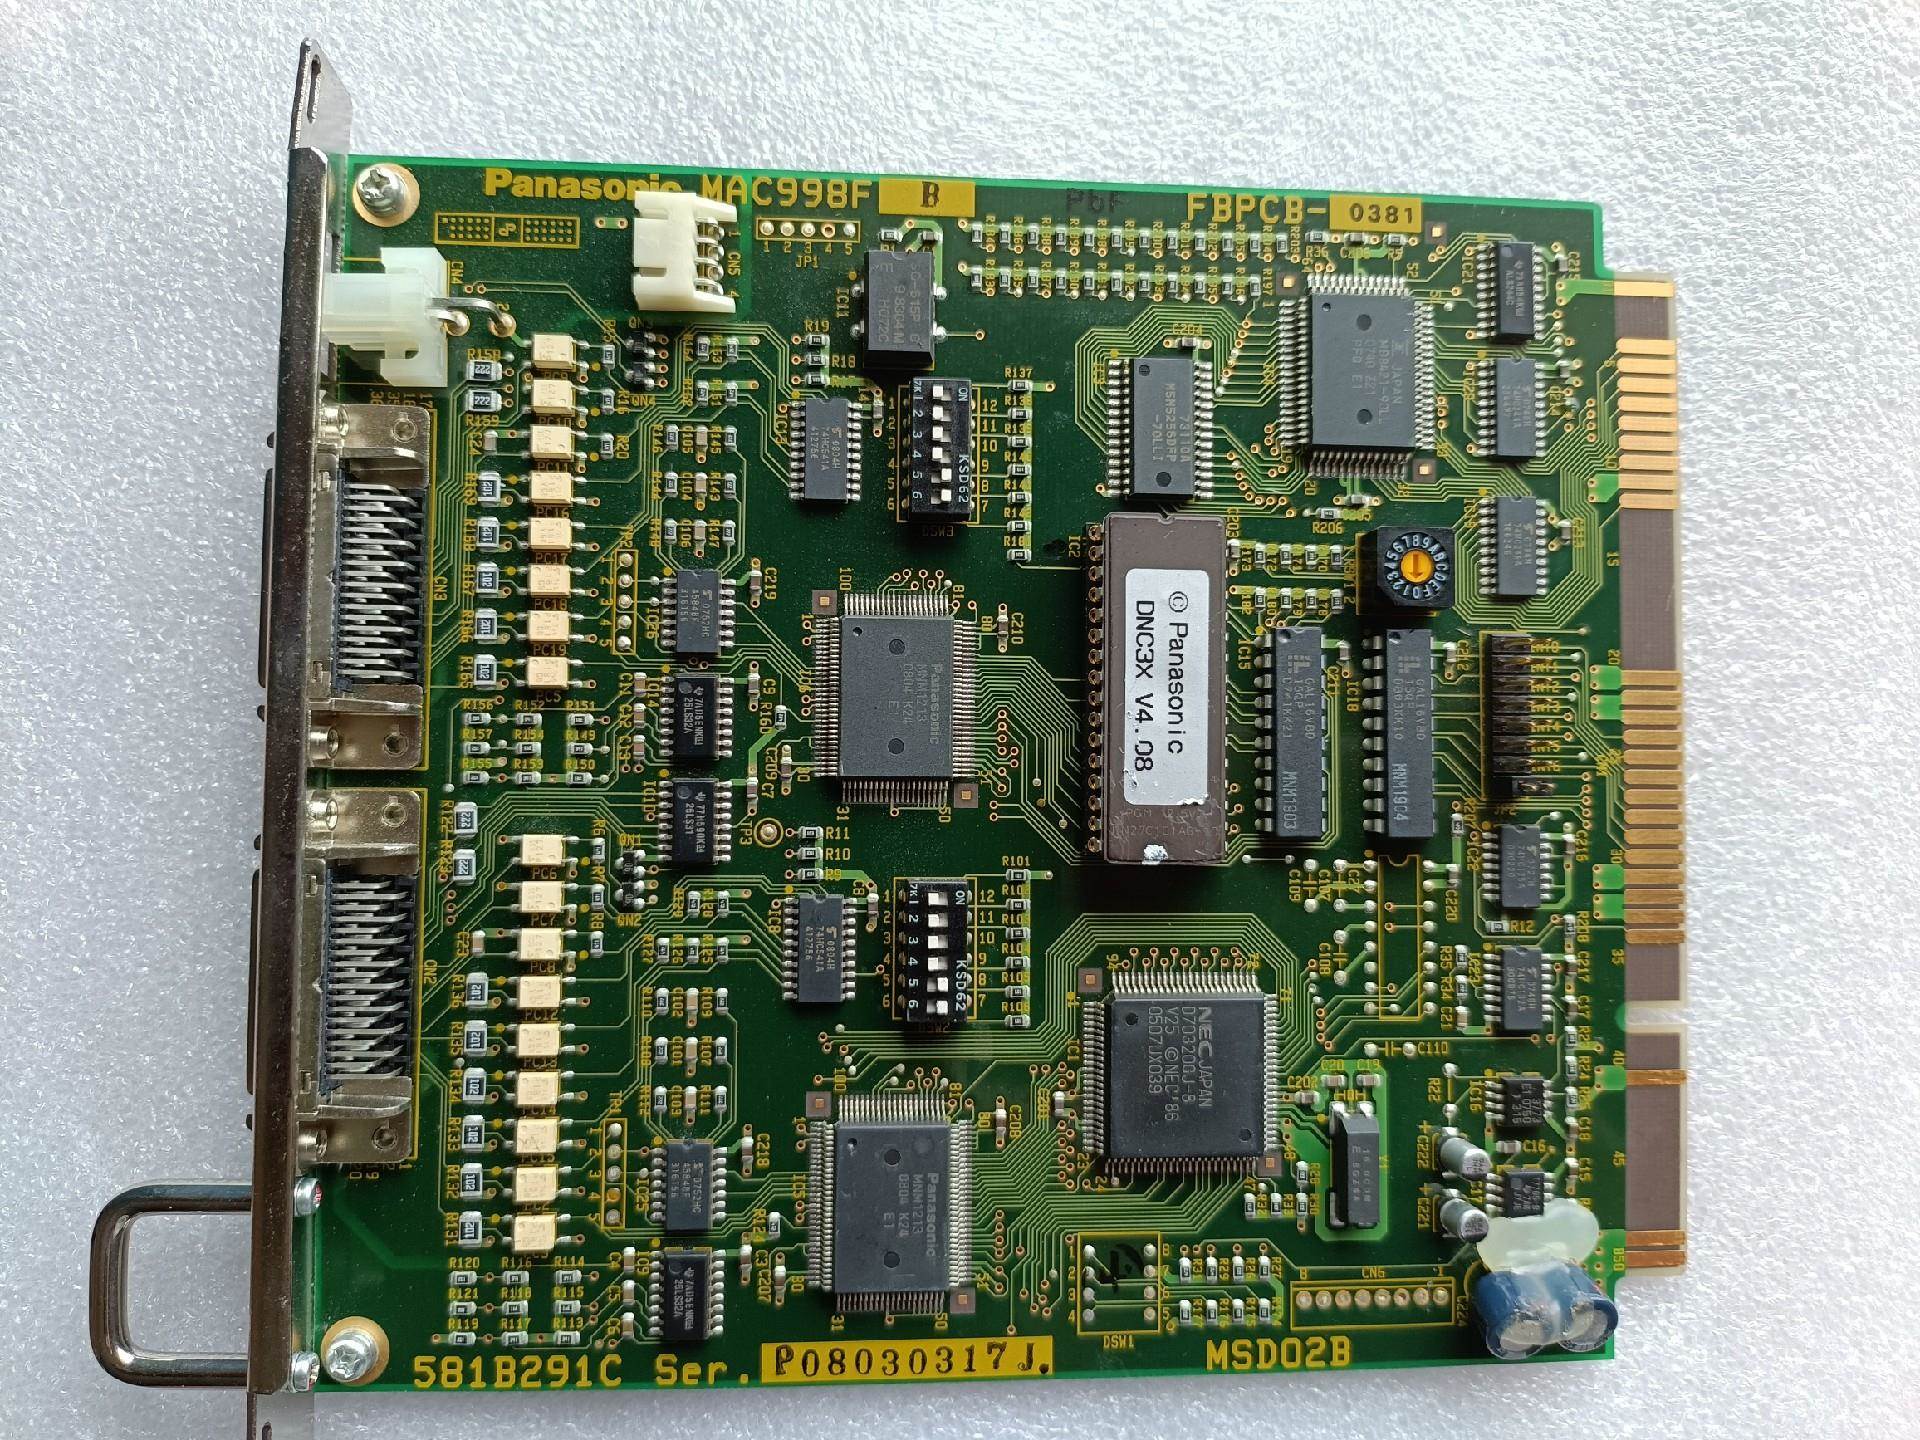 Panasonic MAC998F驱动板，DISCO切割机驱